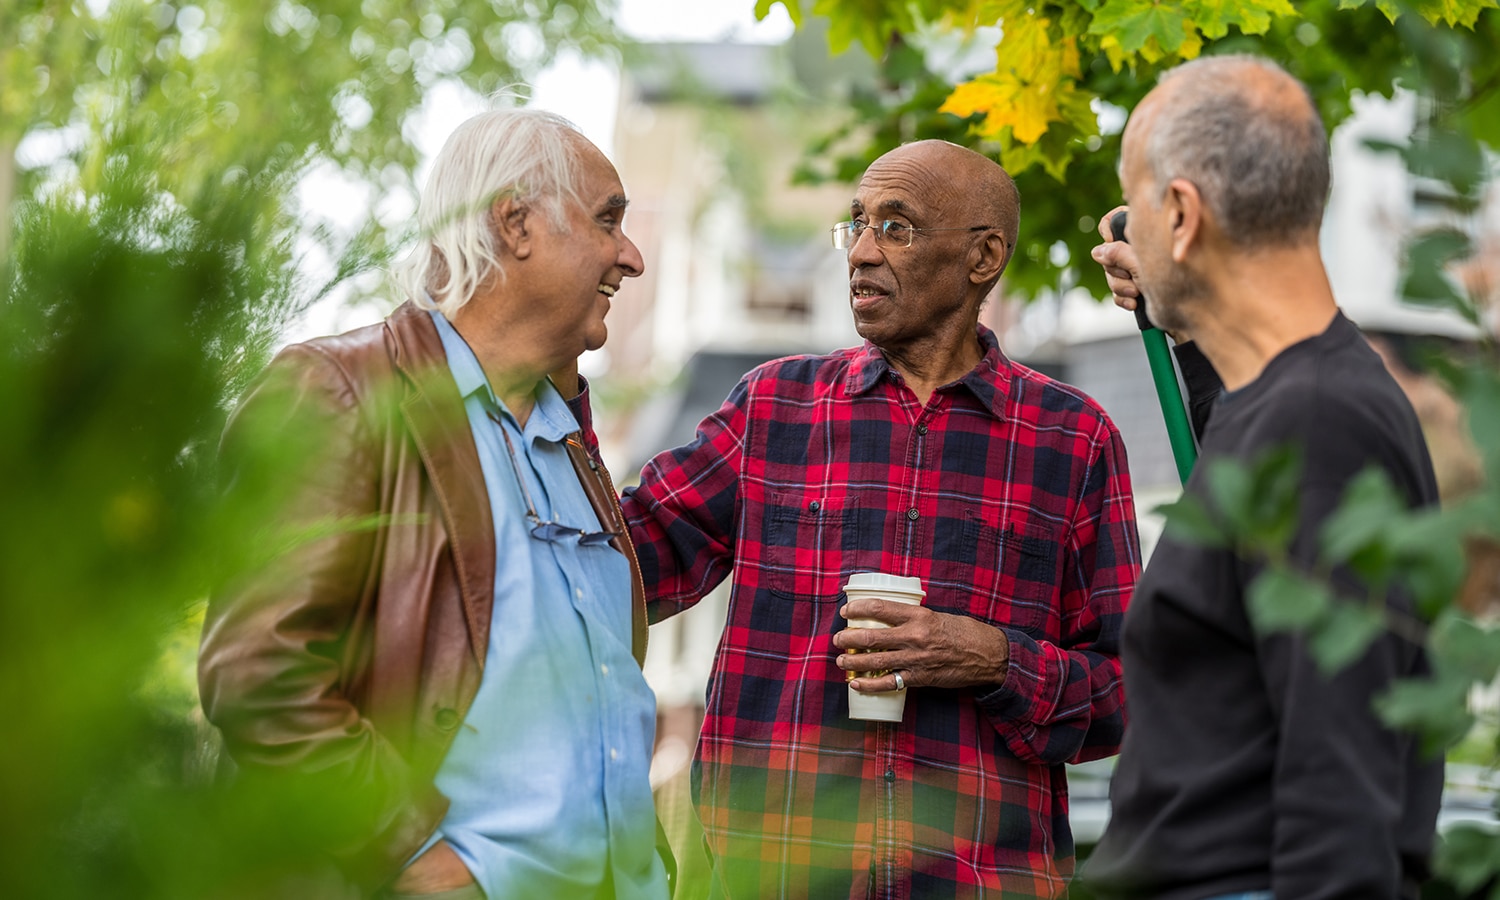 Share God’s Love With Your Neighbors | Navigators Discipleship Resource | Senior neighbors friendly talk